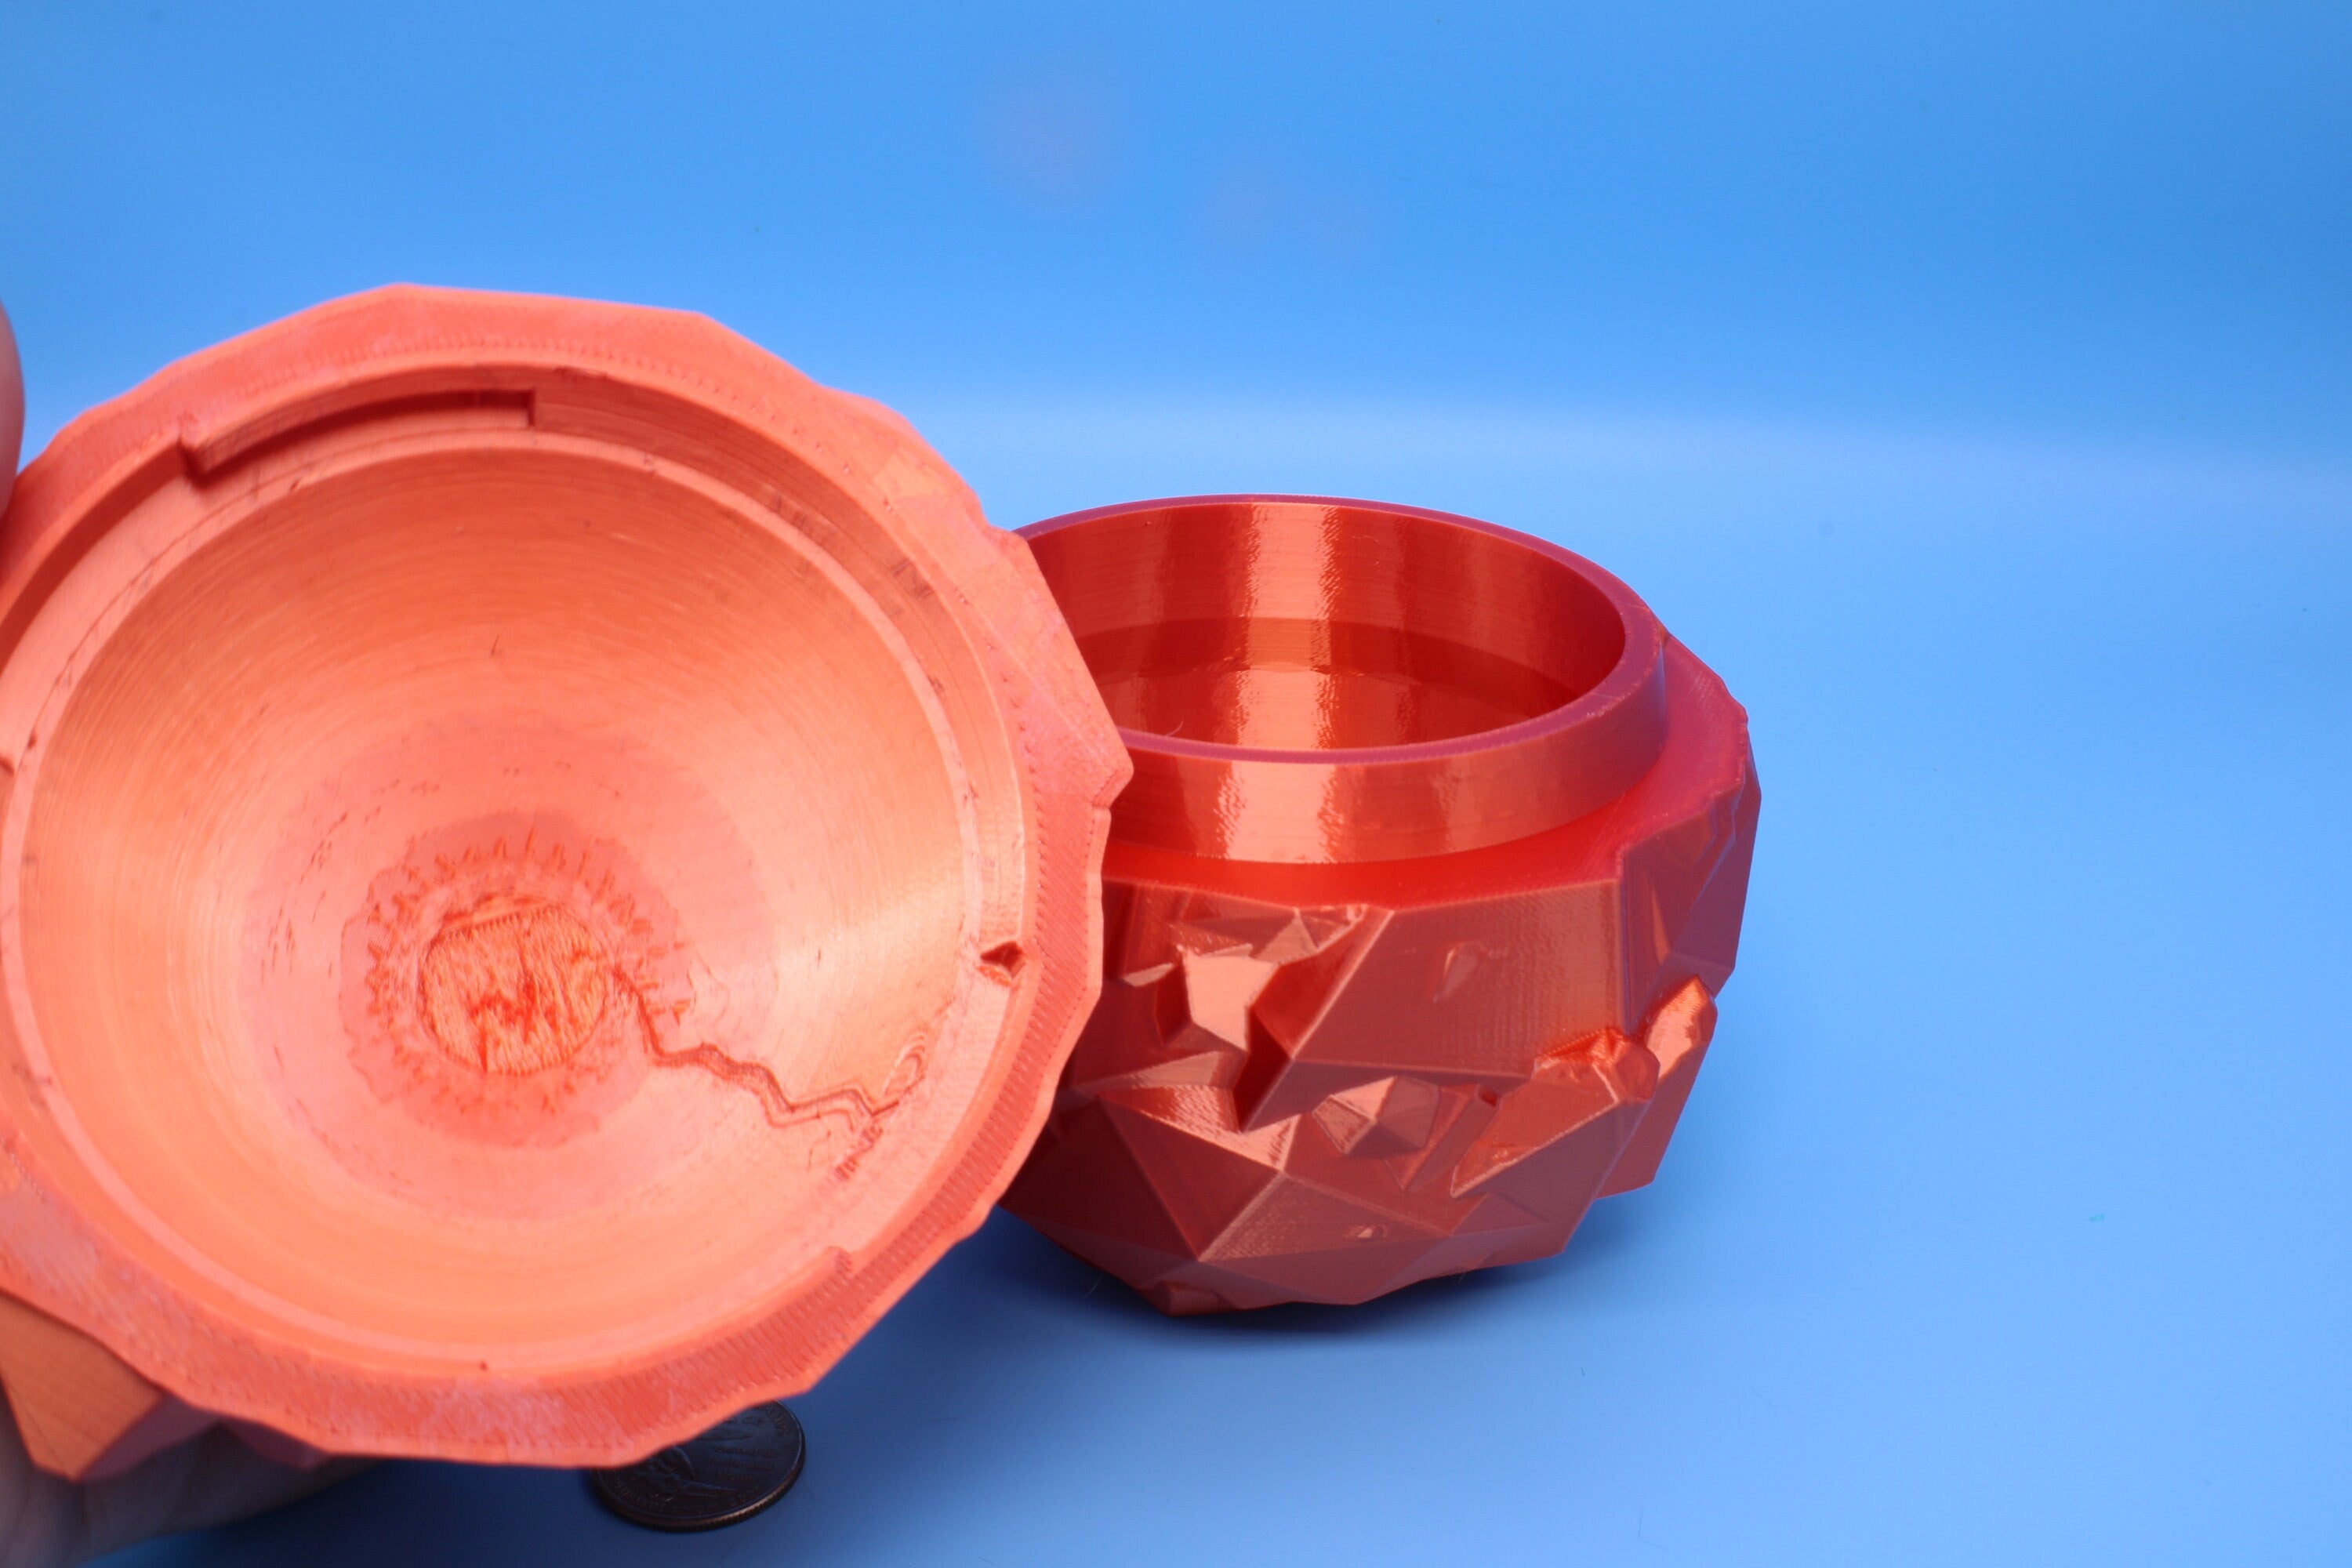 Crystal Dragon Egg- Orange | 3D printed Dragon Egg Storage! | 6 in. | Crystal Egg | Decorative Dragon Egg.